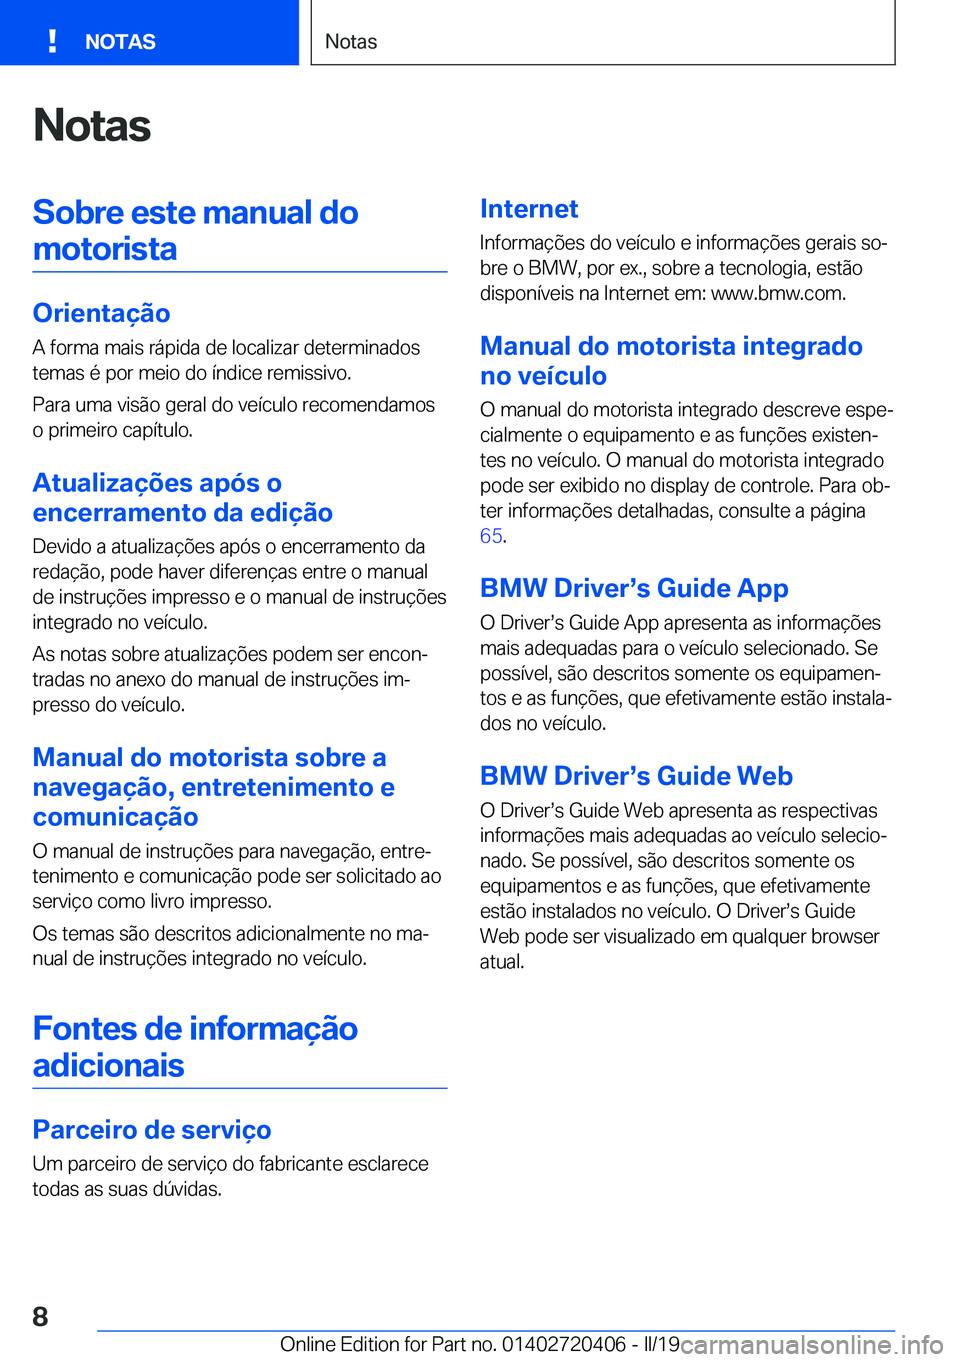 BMW X2 2019  Manual do condutor (in Portuguese) �N�o�t�a�s�S�o�b�r�e��e�s�t�e��m�a�n�u�a�l��d�o�m�o�t�o�r�i�s�t�a
�O�r�i�e�n�t�a�